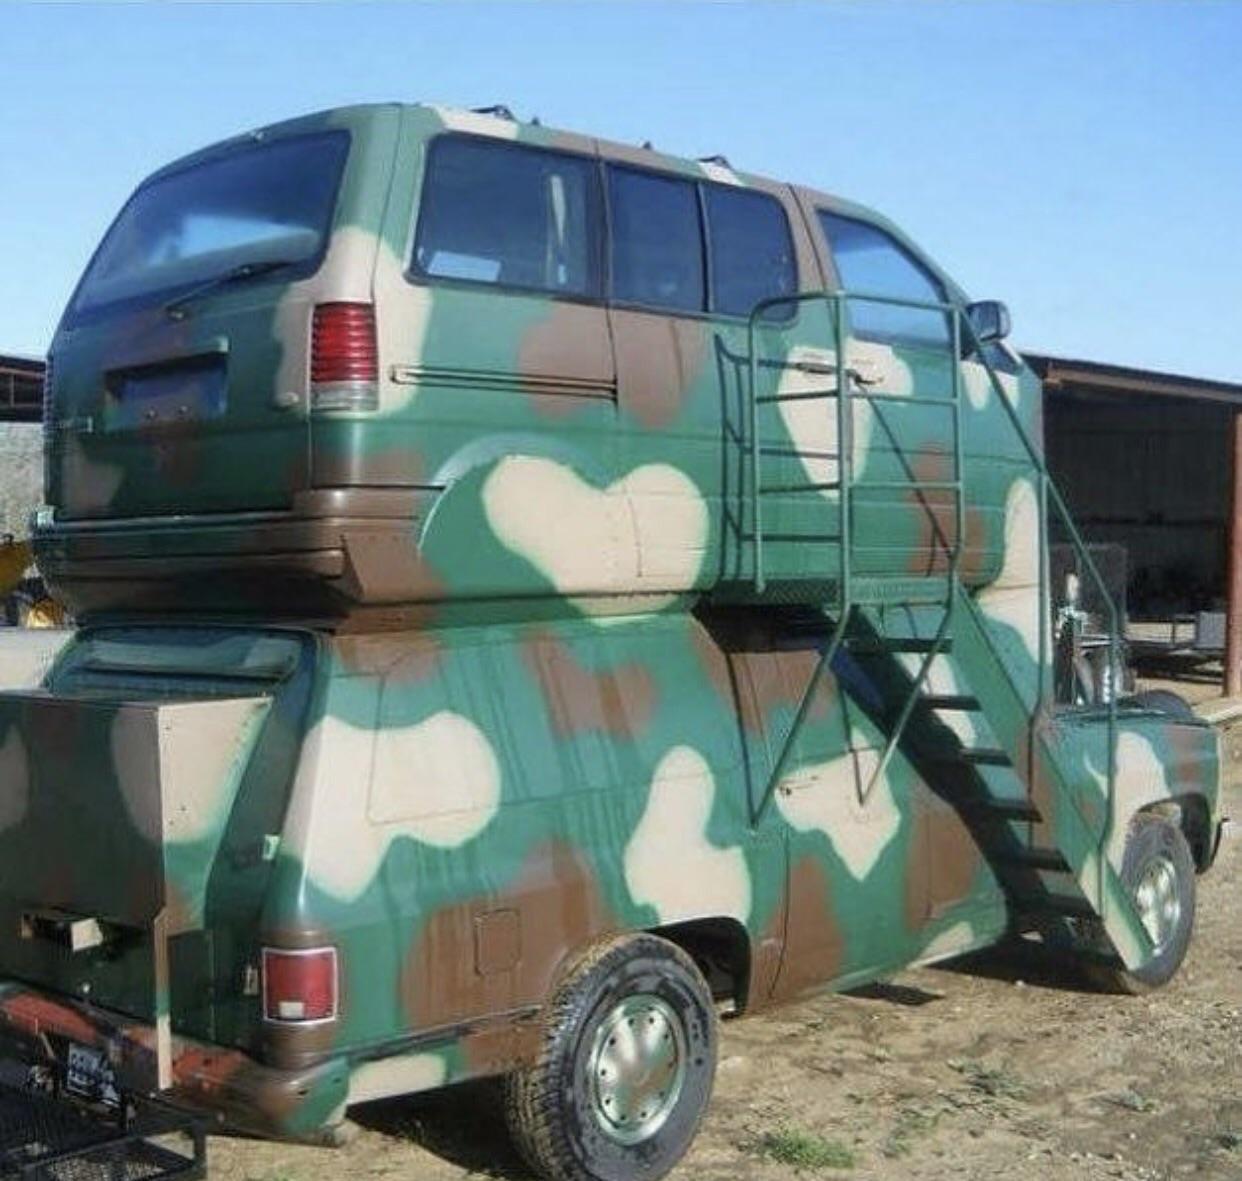 Camouflage Camper Van | peacecommission.kdsg.gov.ng